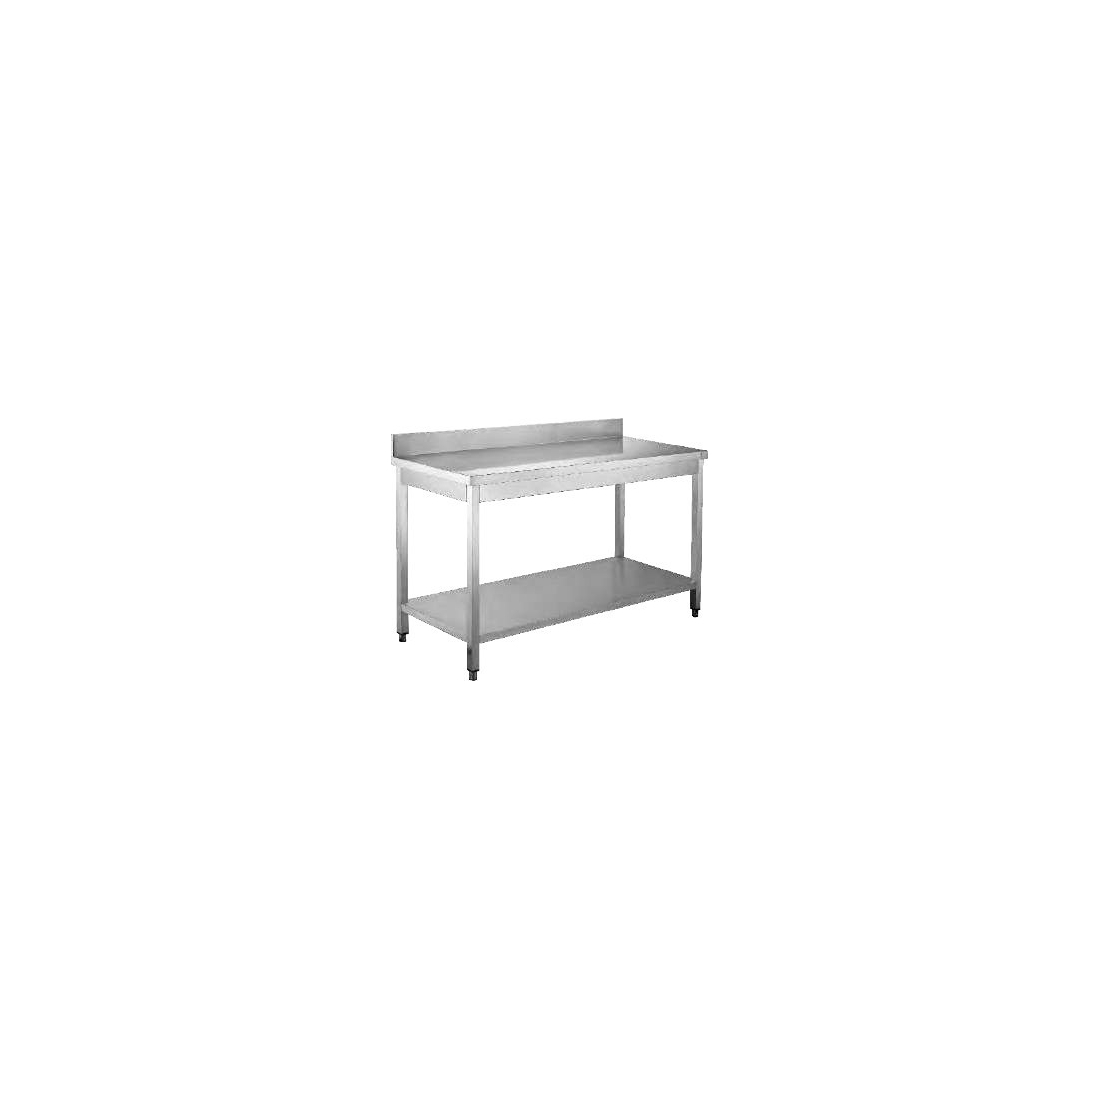 Stainless Steel Service Table with backsplash - undershelf  1.5m (WTD-152B)|mkayn|مكاين